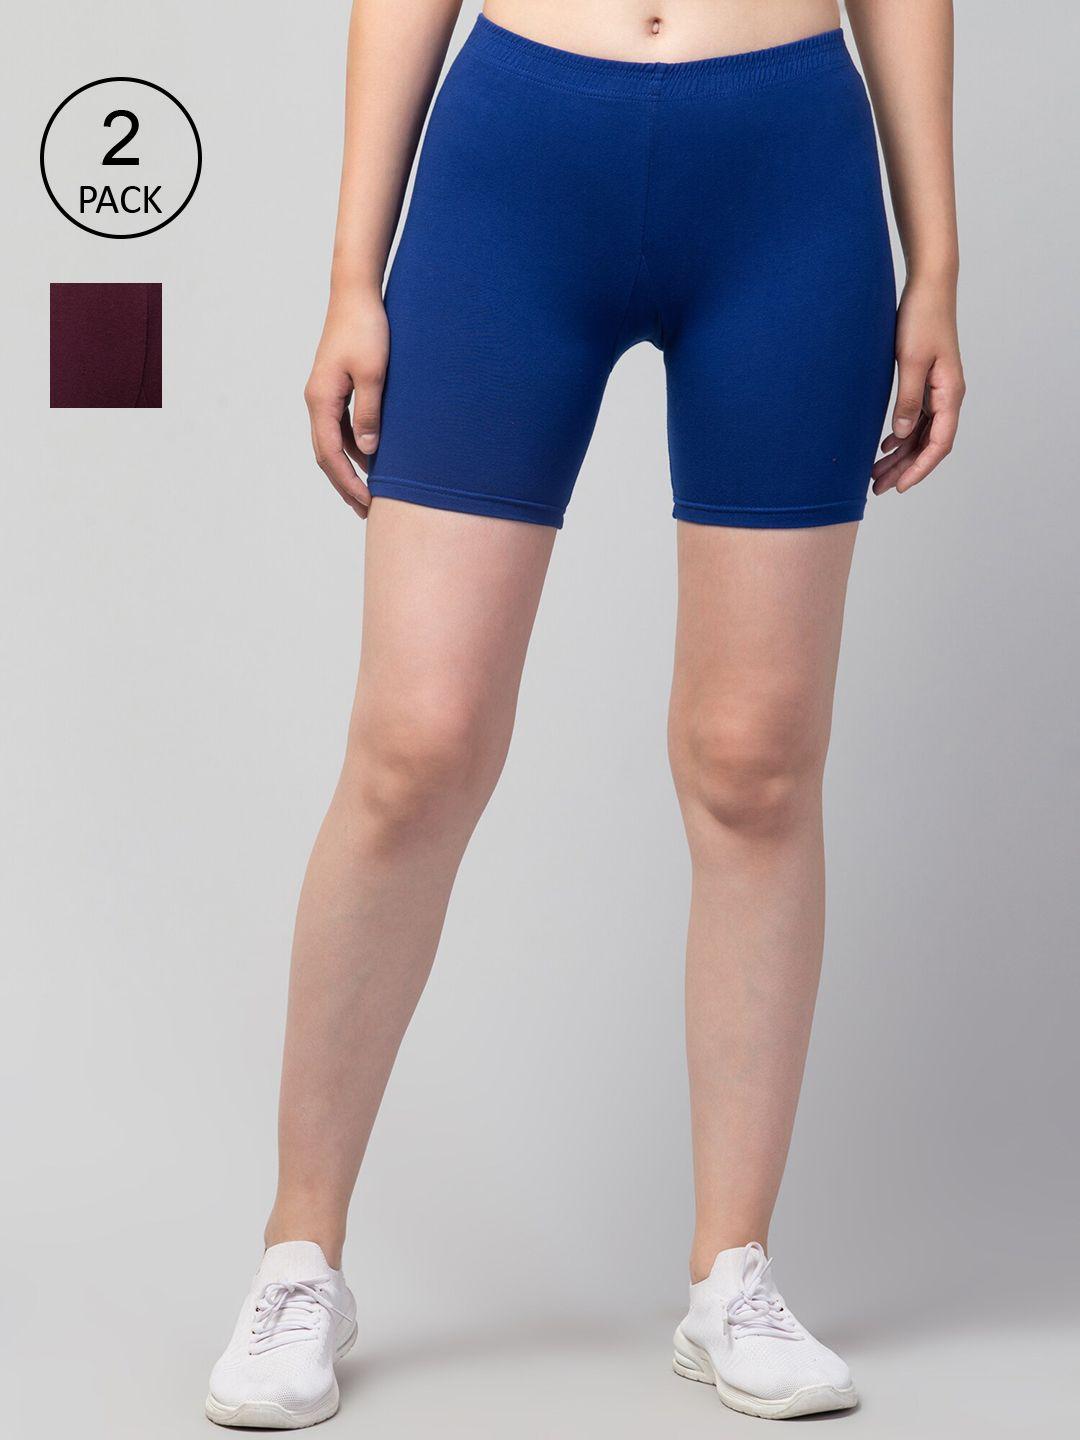 apraa-&-parma-women-slim-fit-cycling-sports-shorts